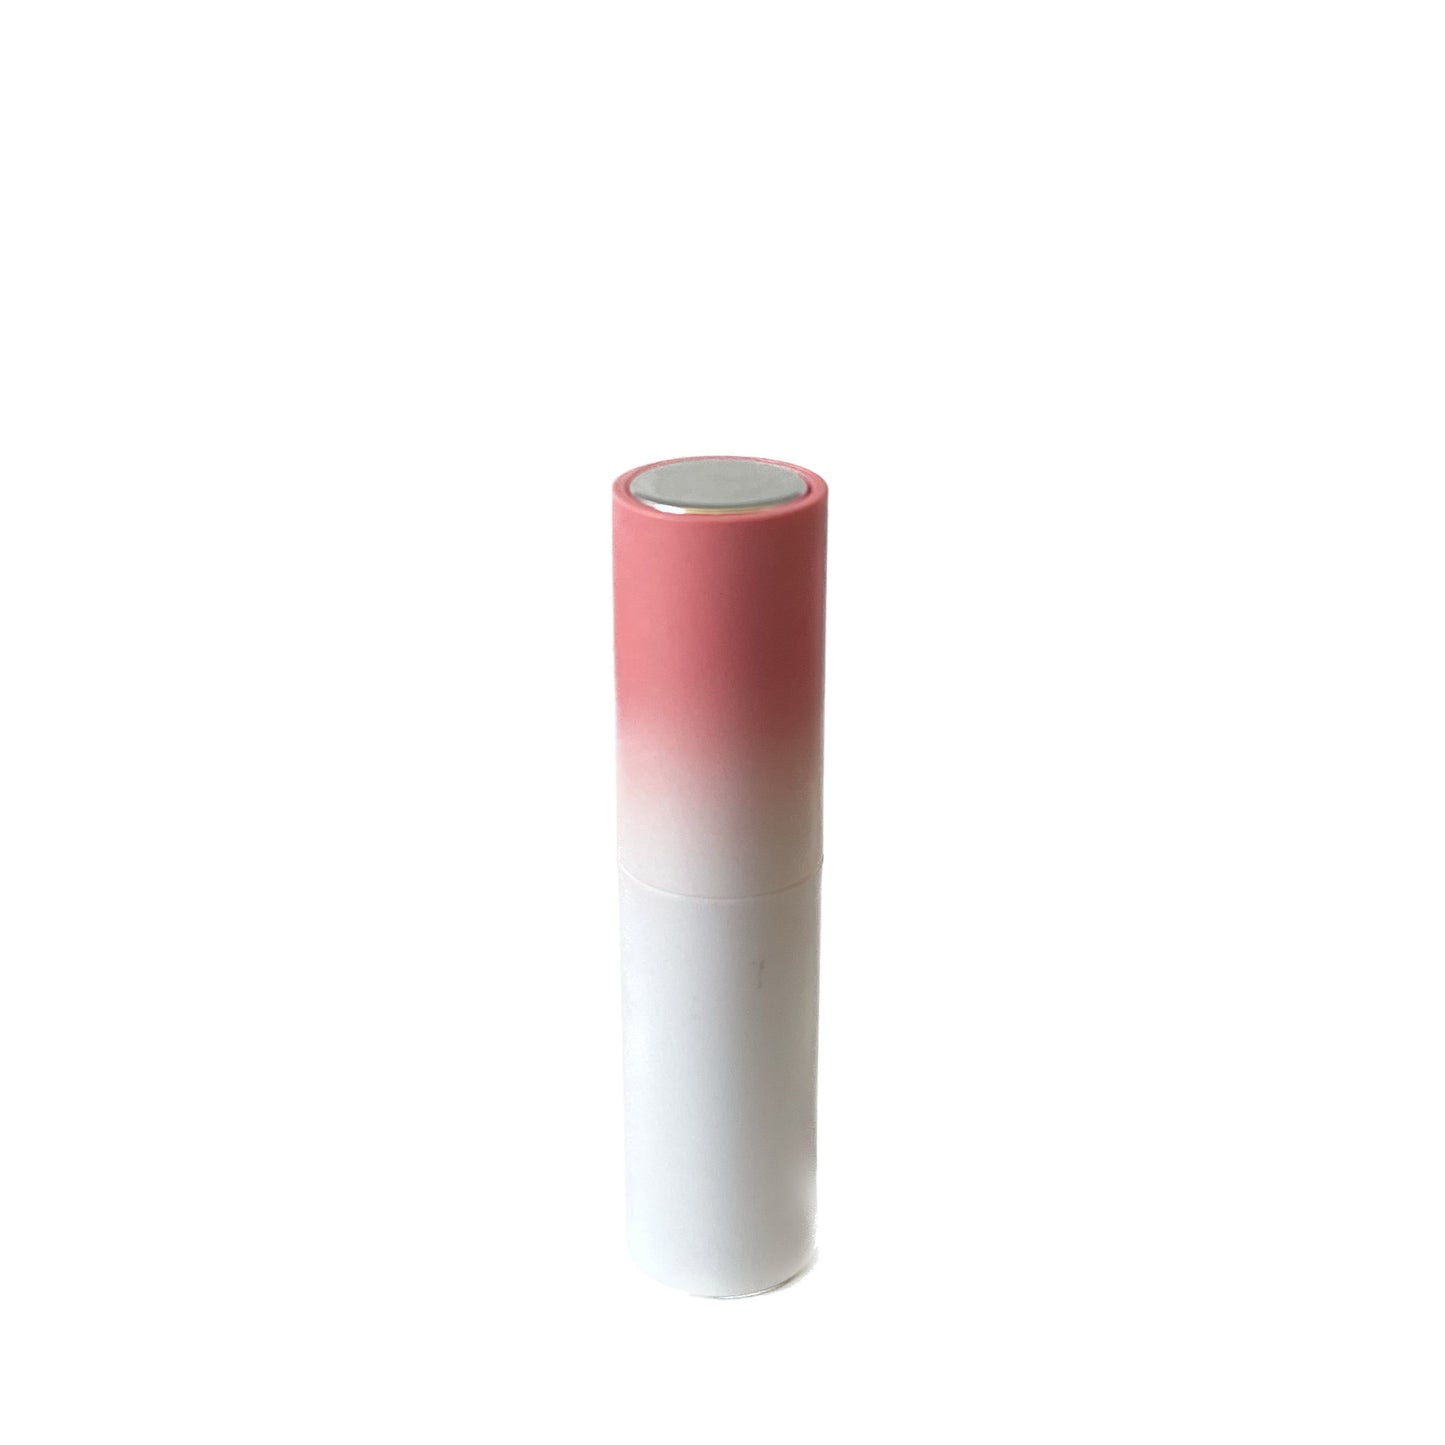 8 ml Pink and White Travel Sprayer